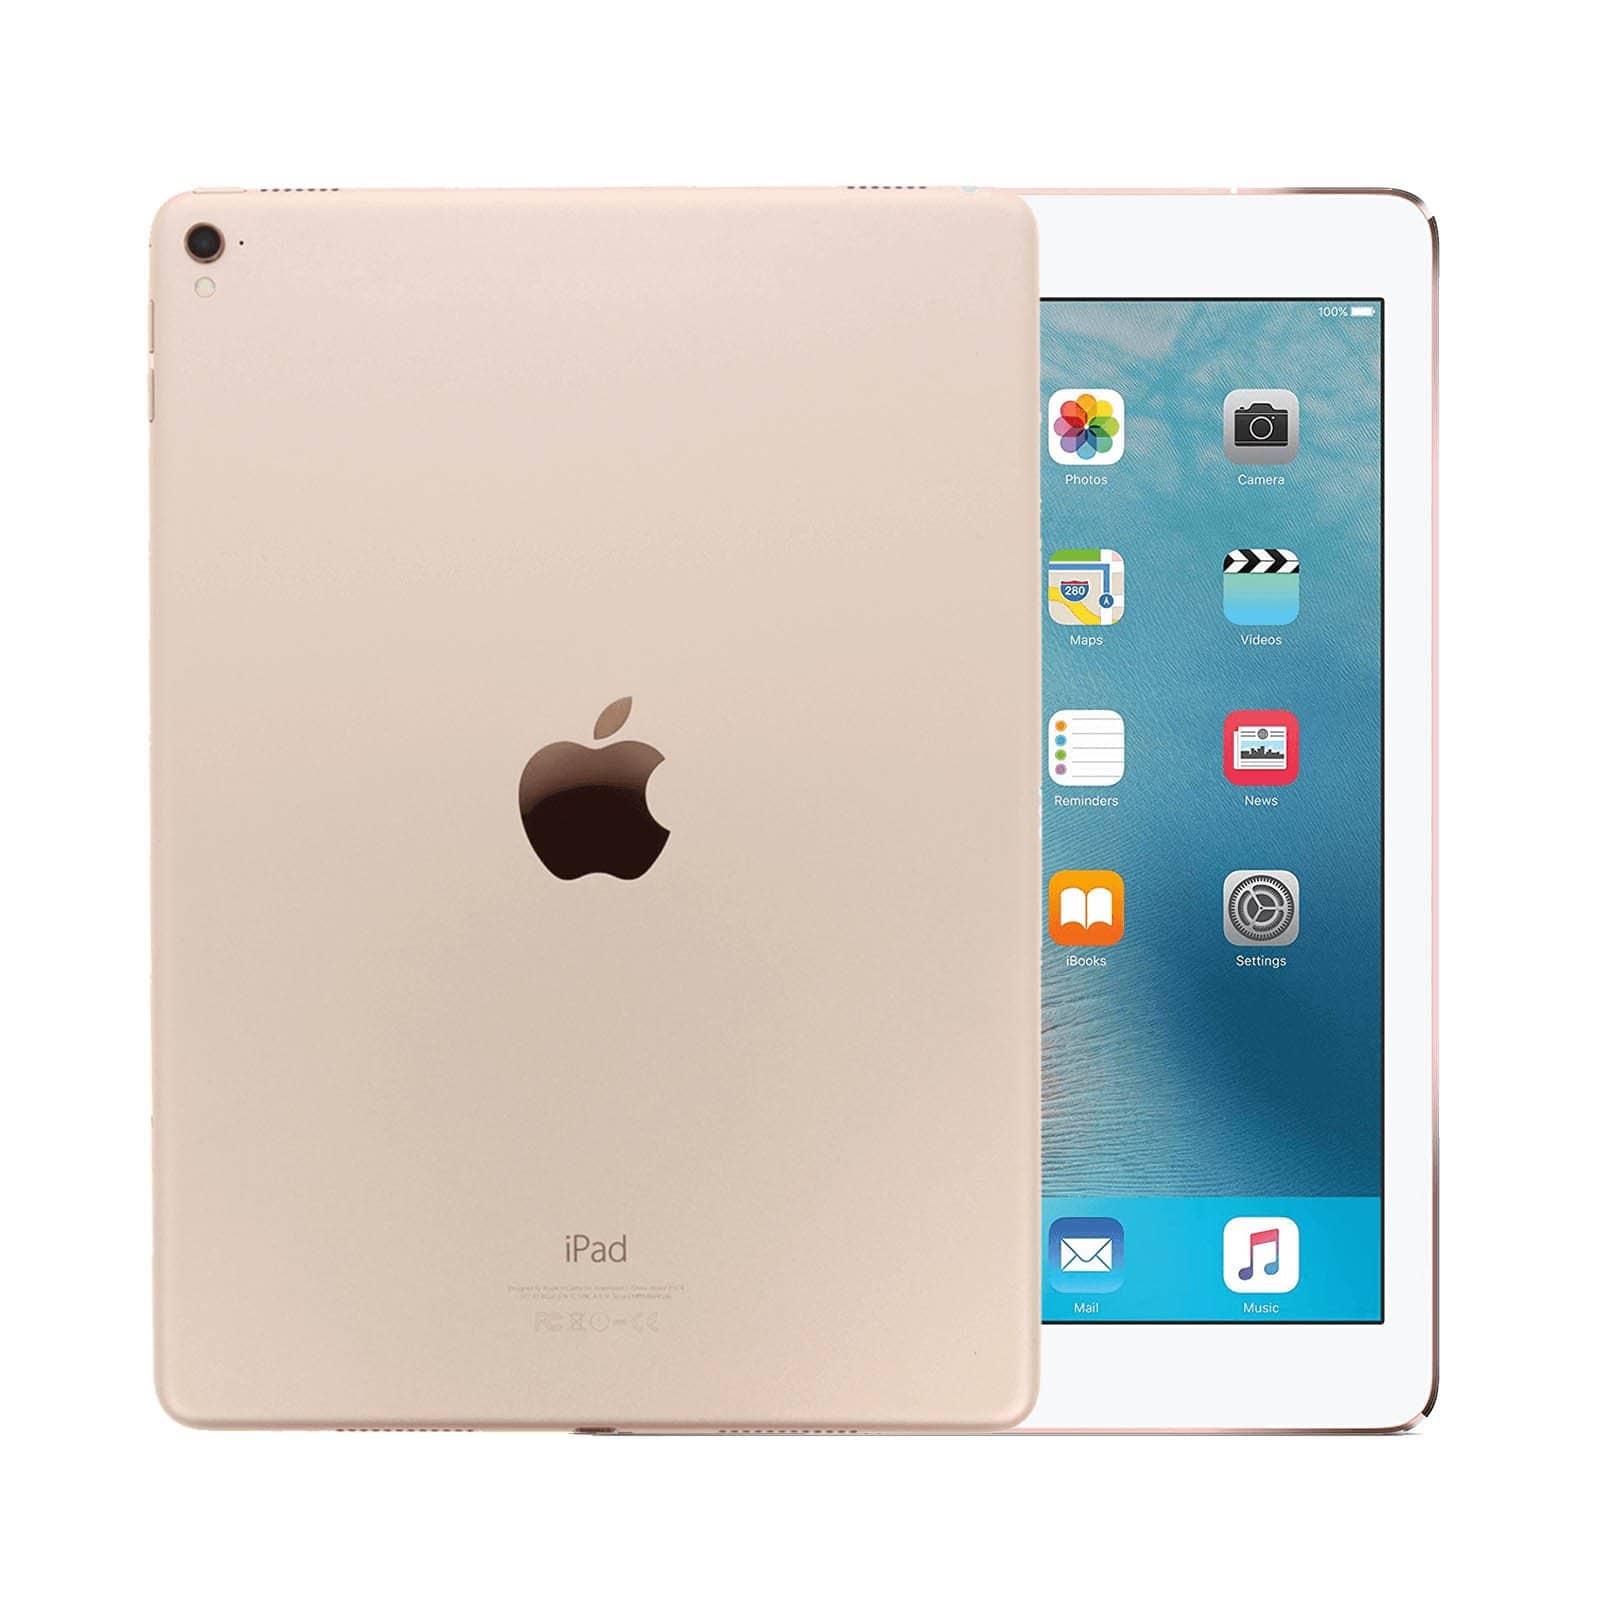 iPad Pro 9.7 Inch 128GB Gold Good - WiFi 128GB Gold Good